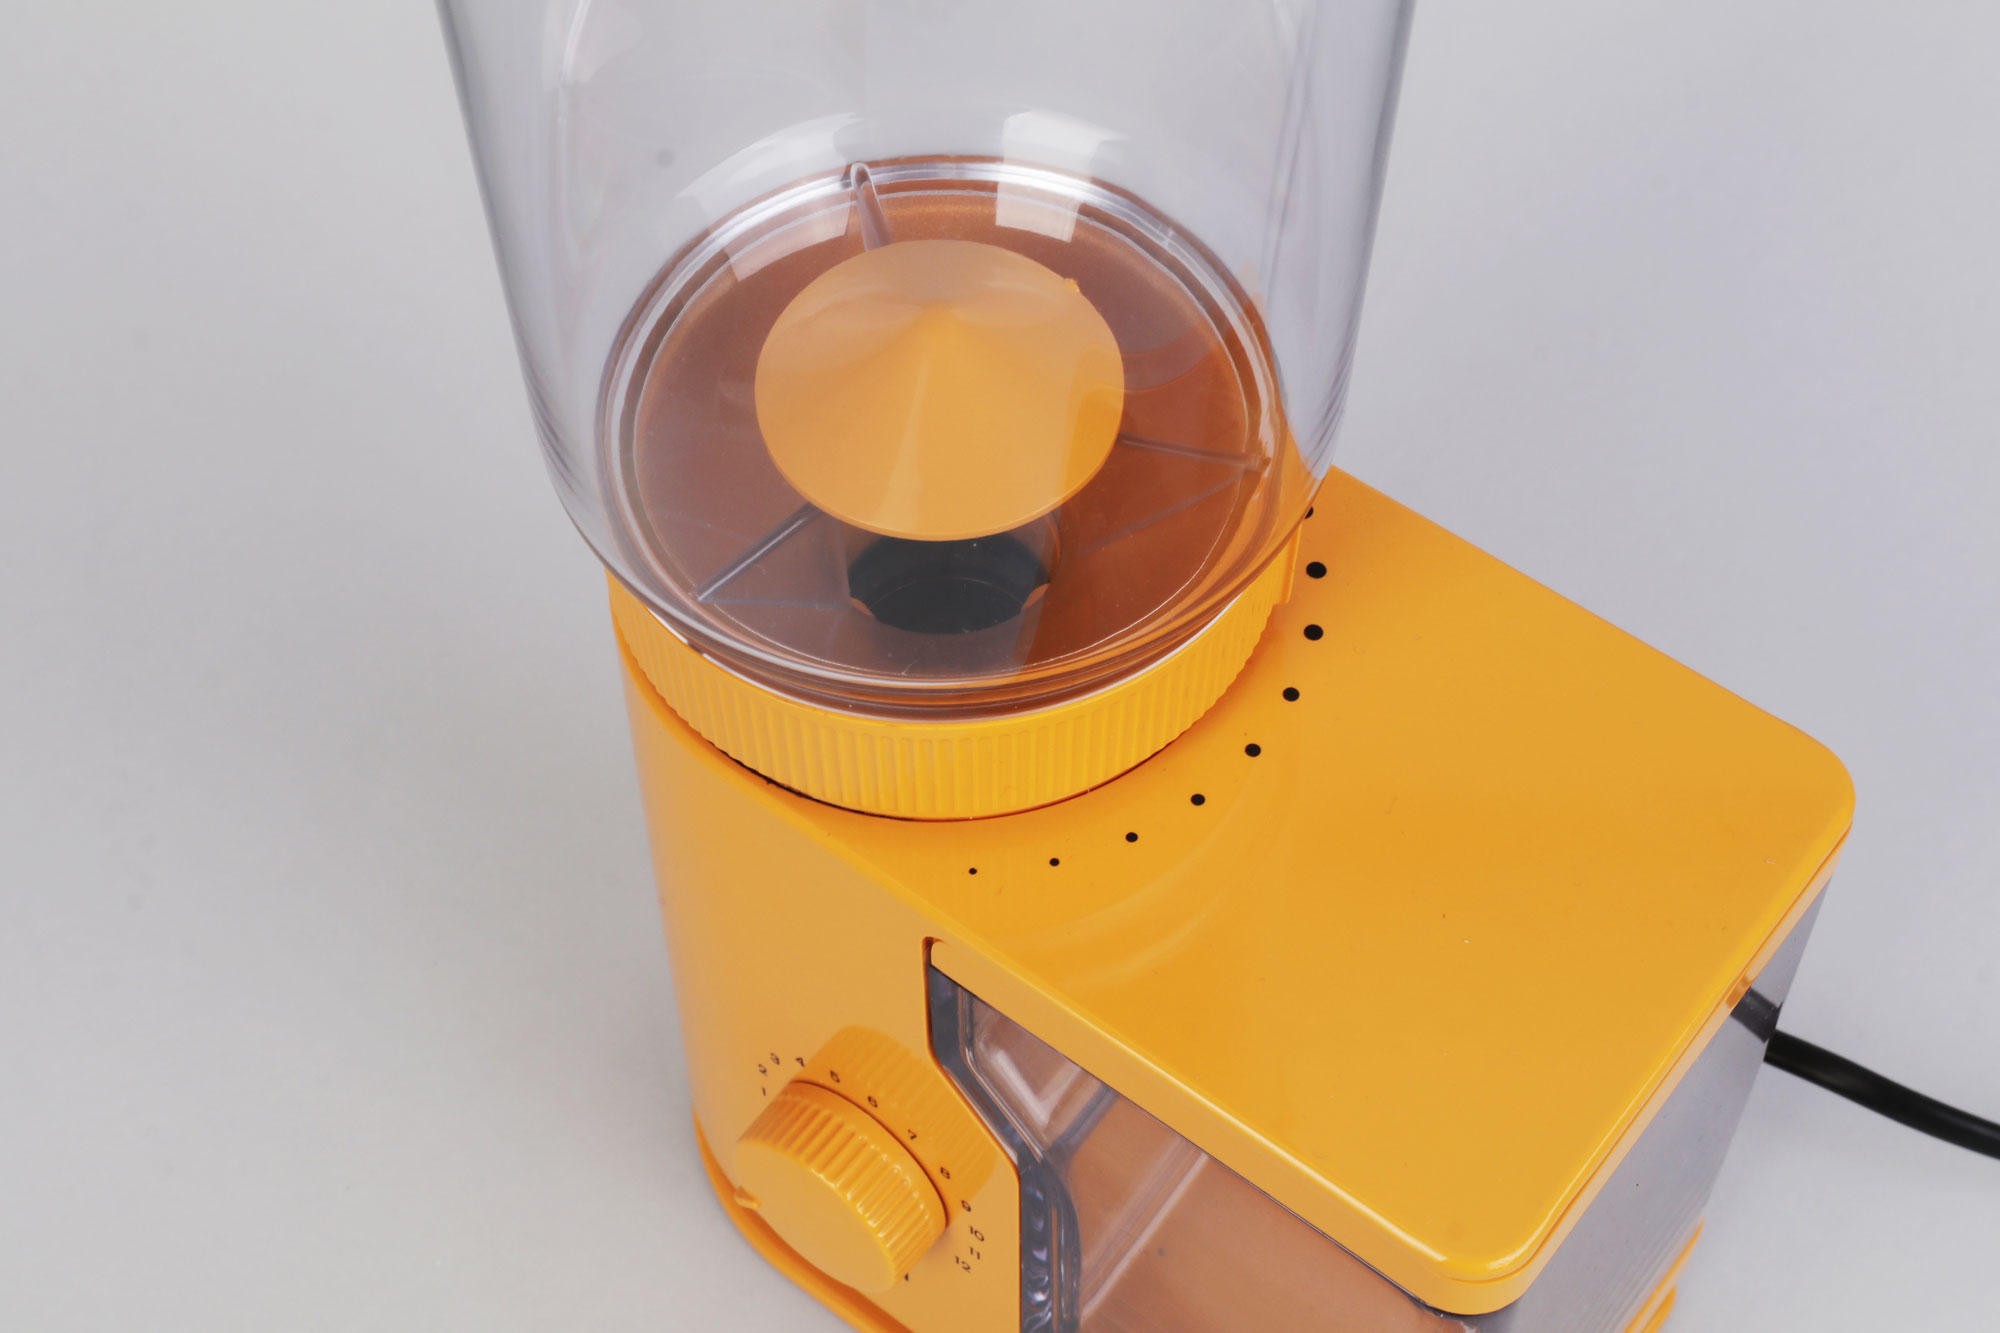 https://onlyonceshop.com/media/pages/product/braun-kmm-20-coffee-grinder/79ae9185cf-1650541407/oo_orange-yellow-braun-coffee-grinder-design-kmm-20-type-4050-_only-once-shop_5.jpg